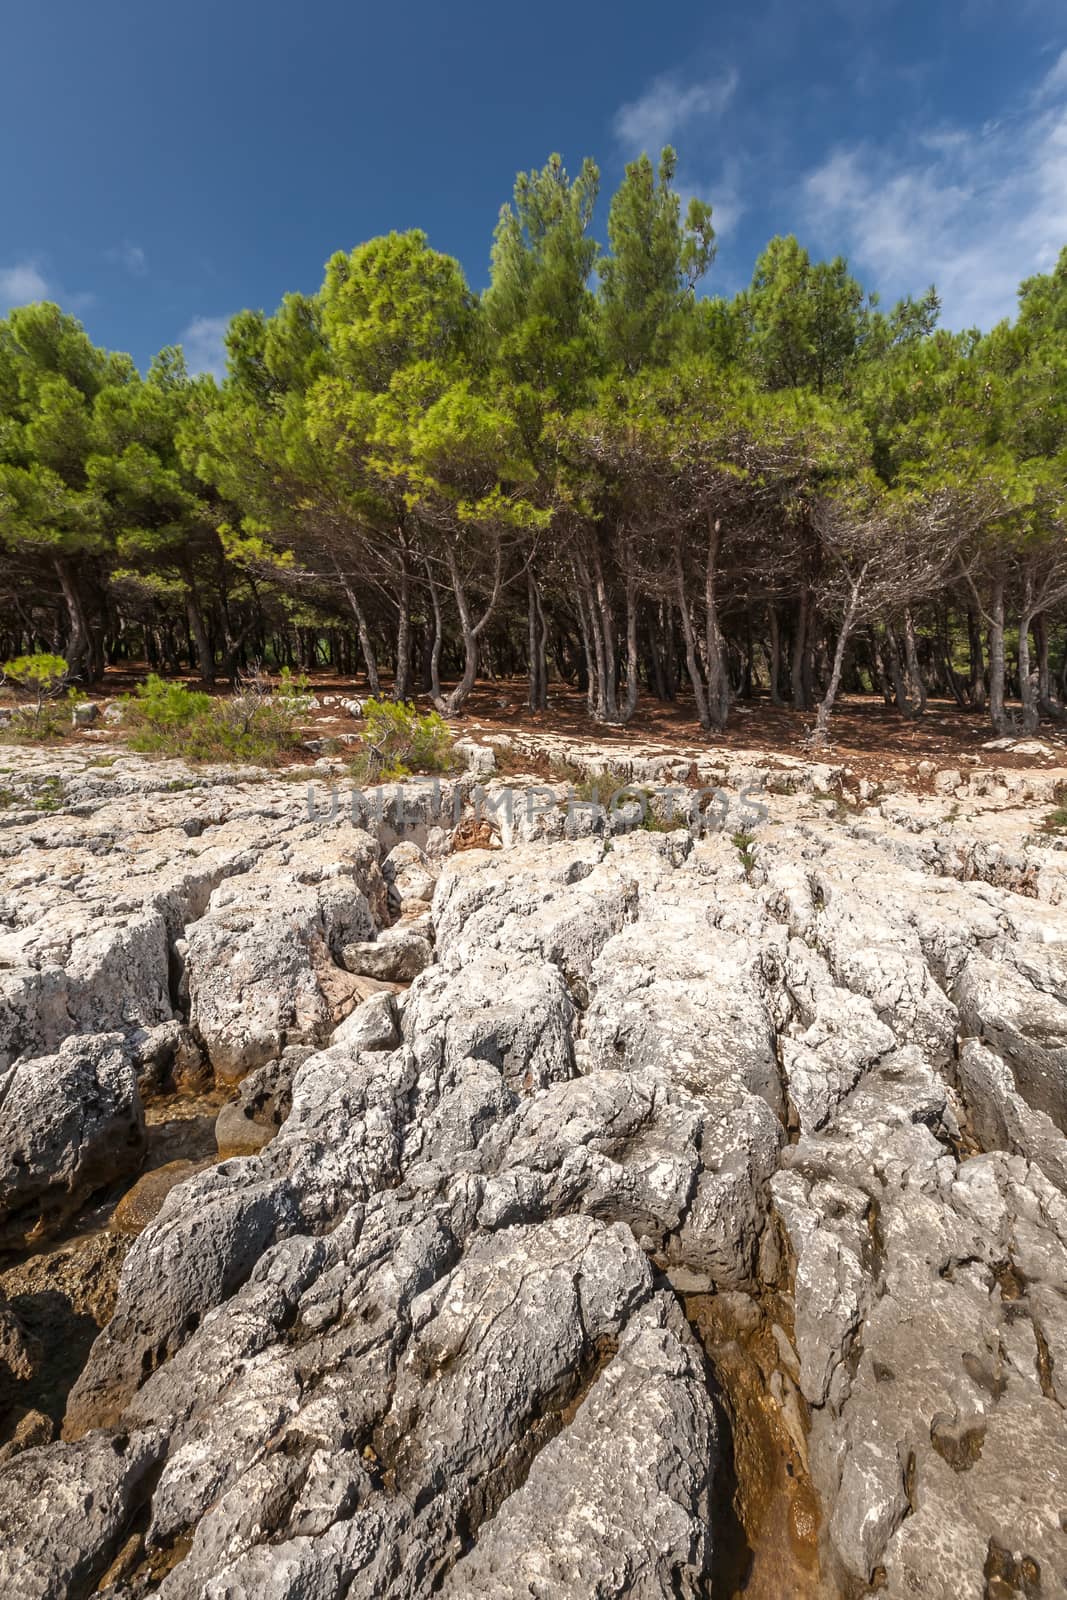 The Pine trees on rock in Croatia